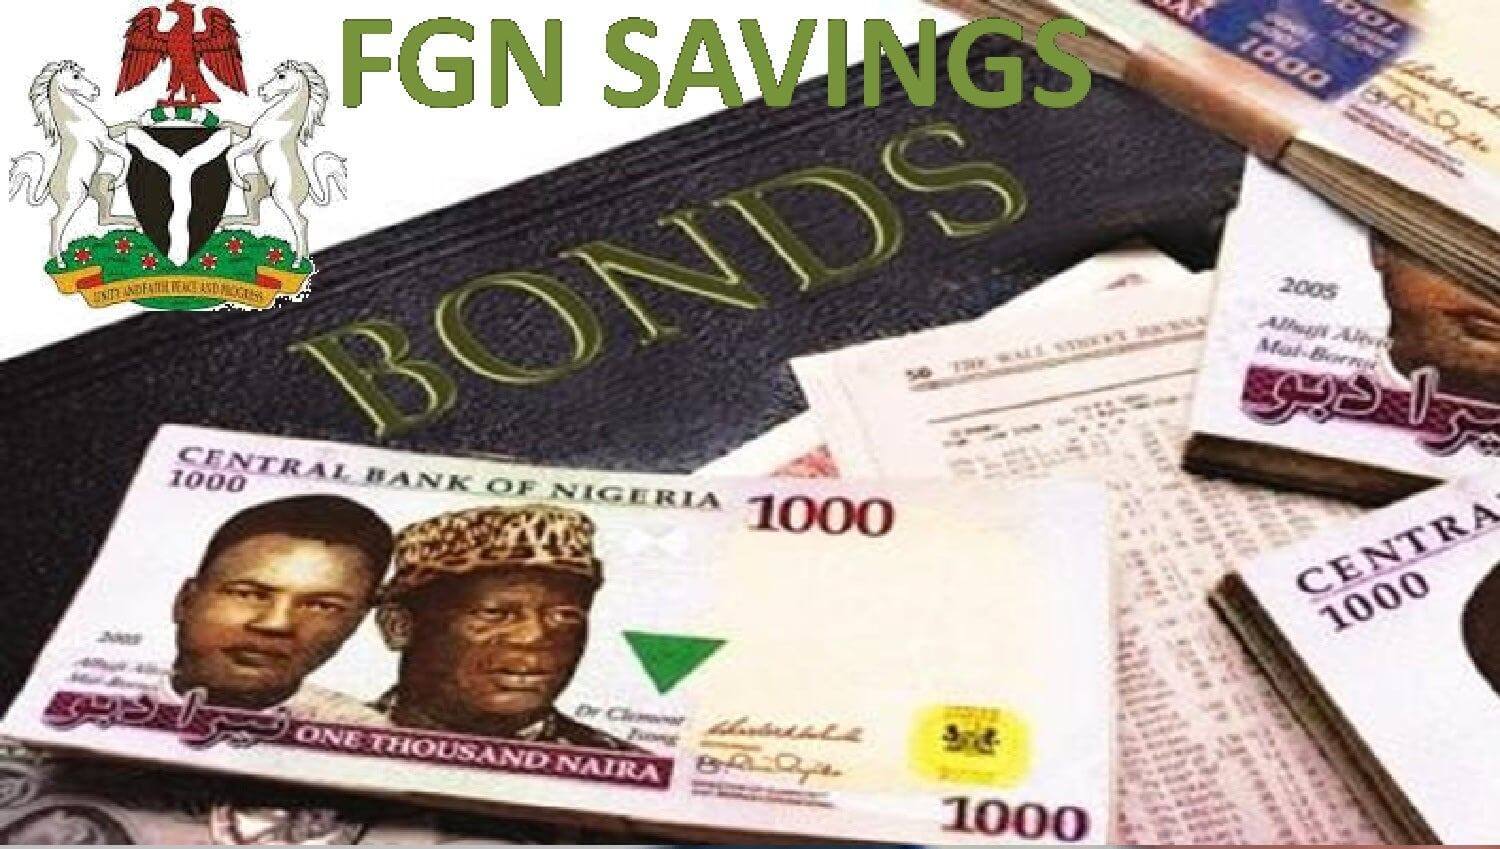 FGN Savings Bond